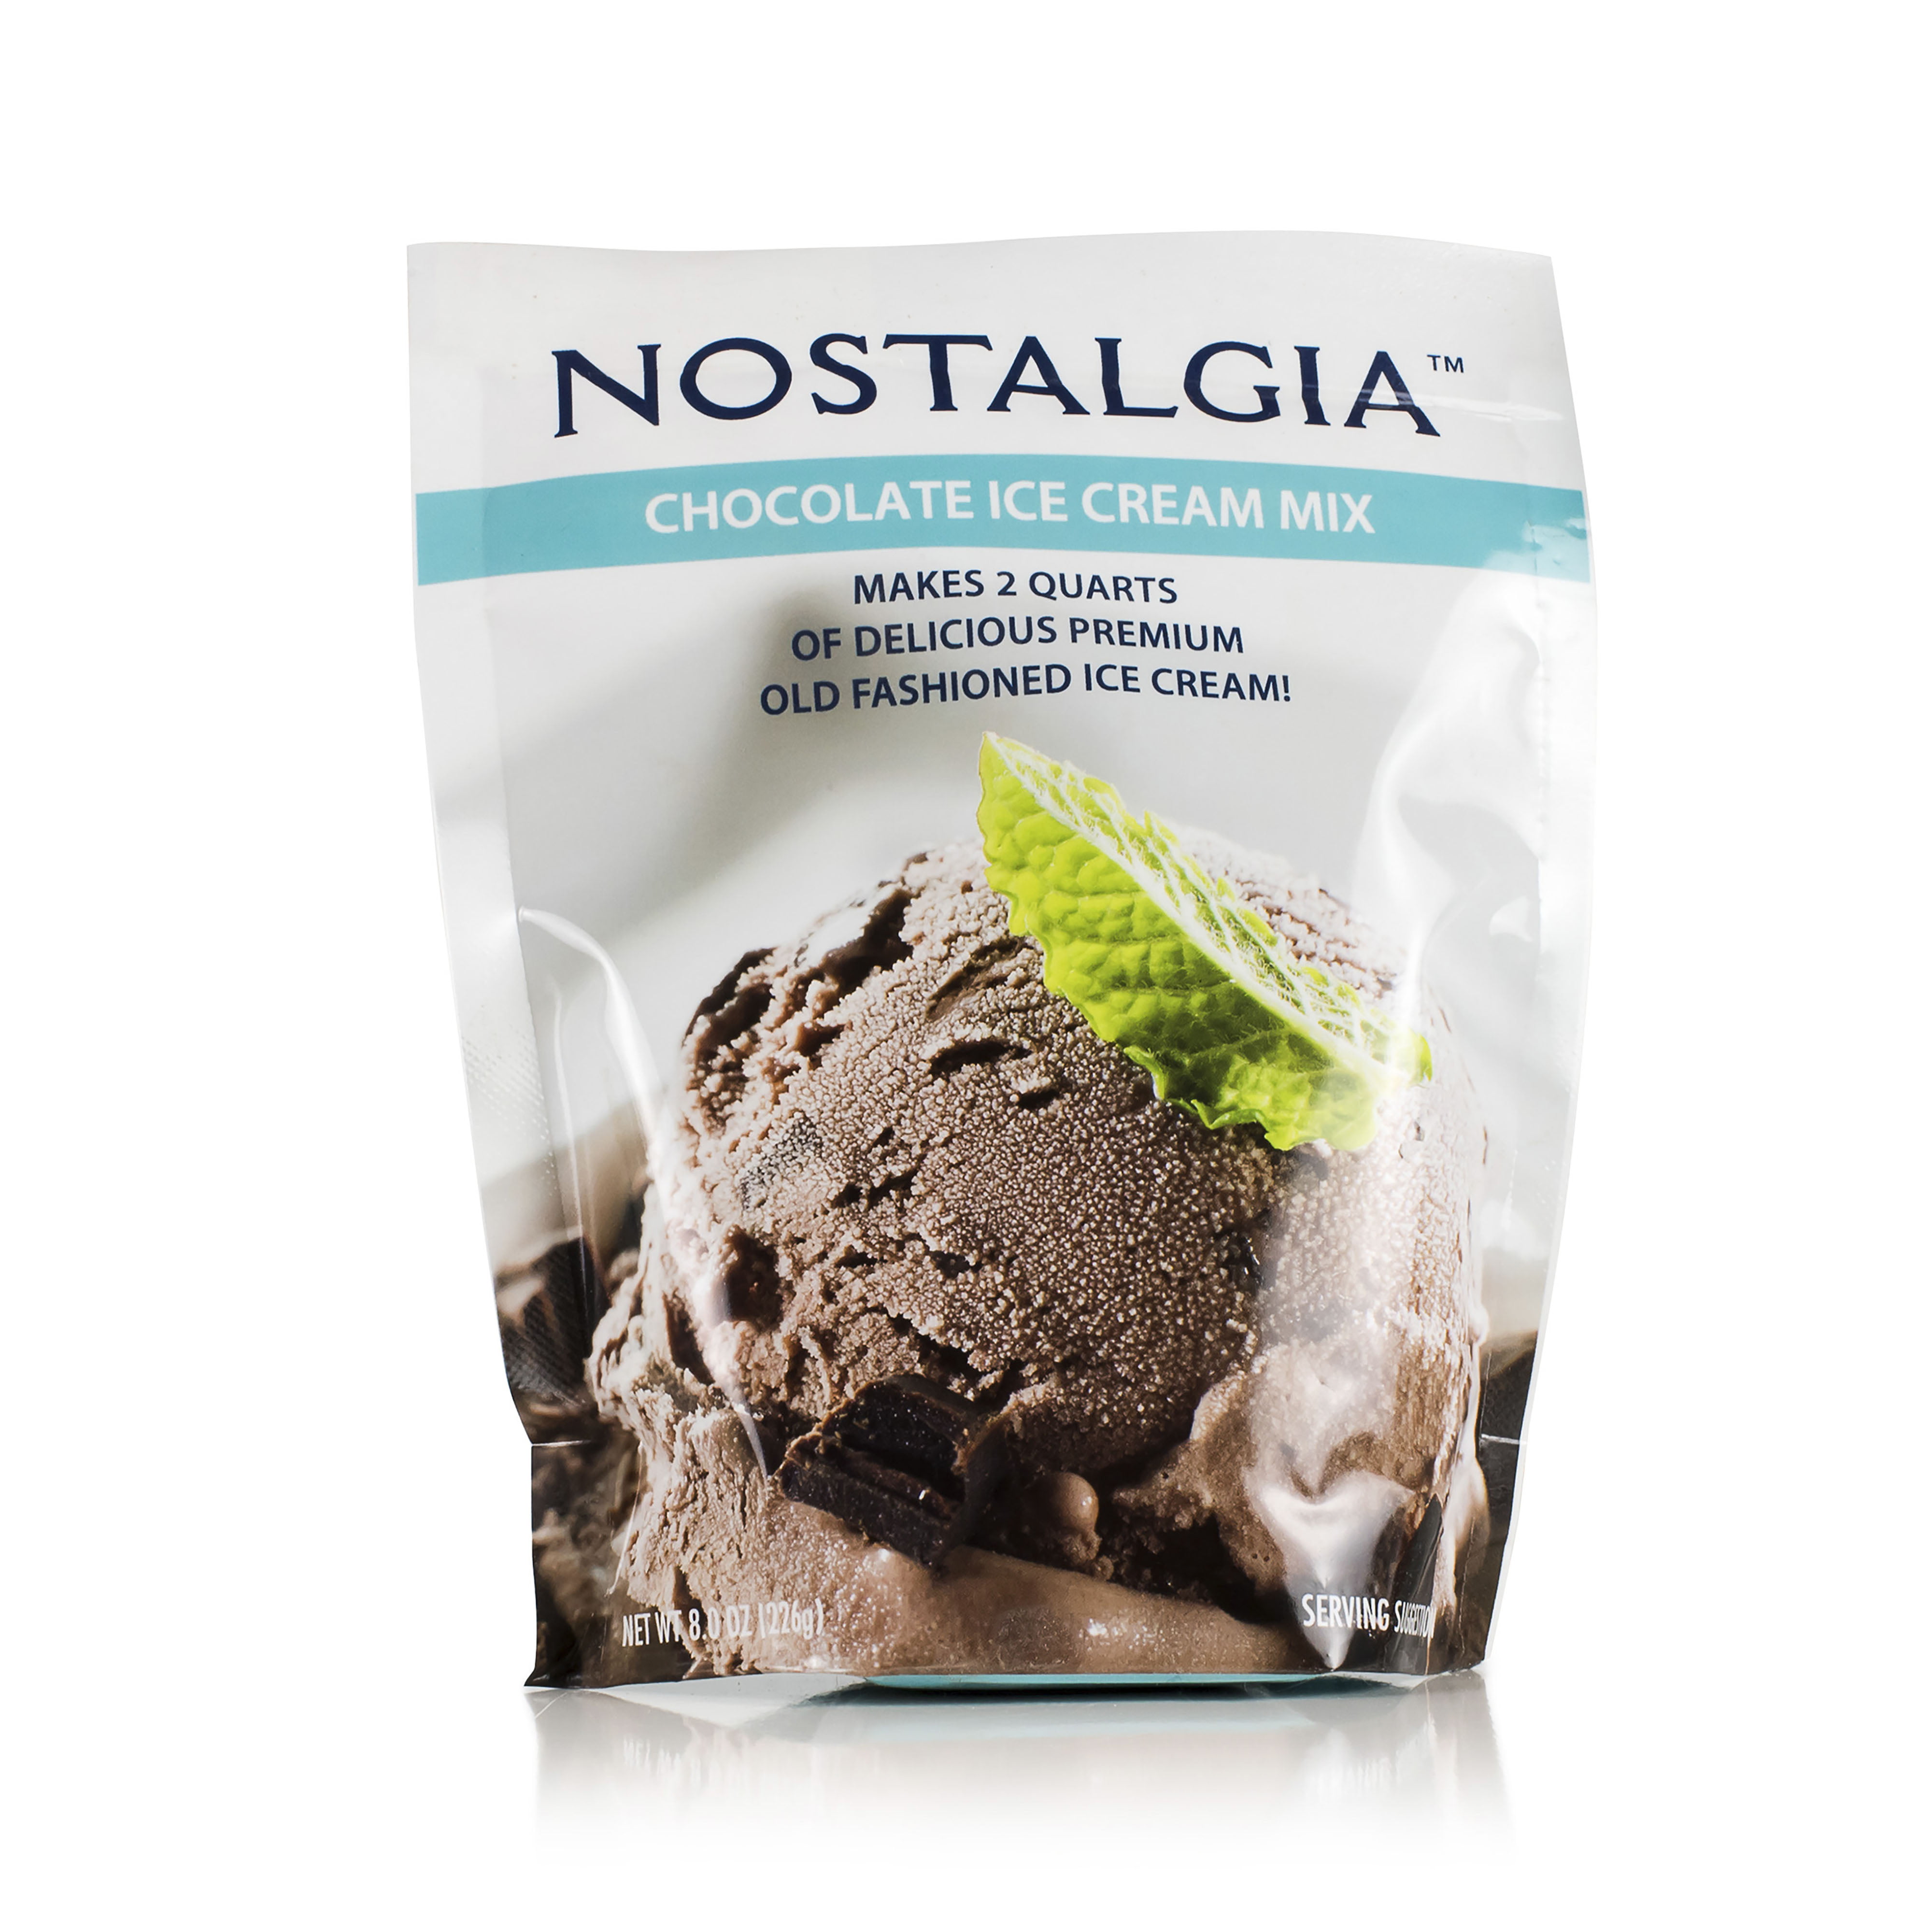 Nostalgia Ice Cream Starter Pack - Ice Cream Maker Rock Salt (8lb